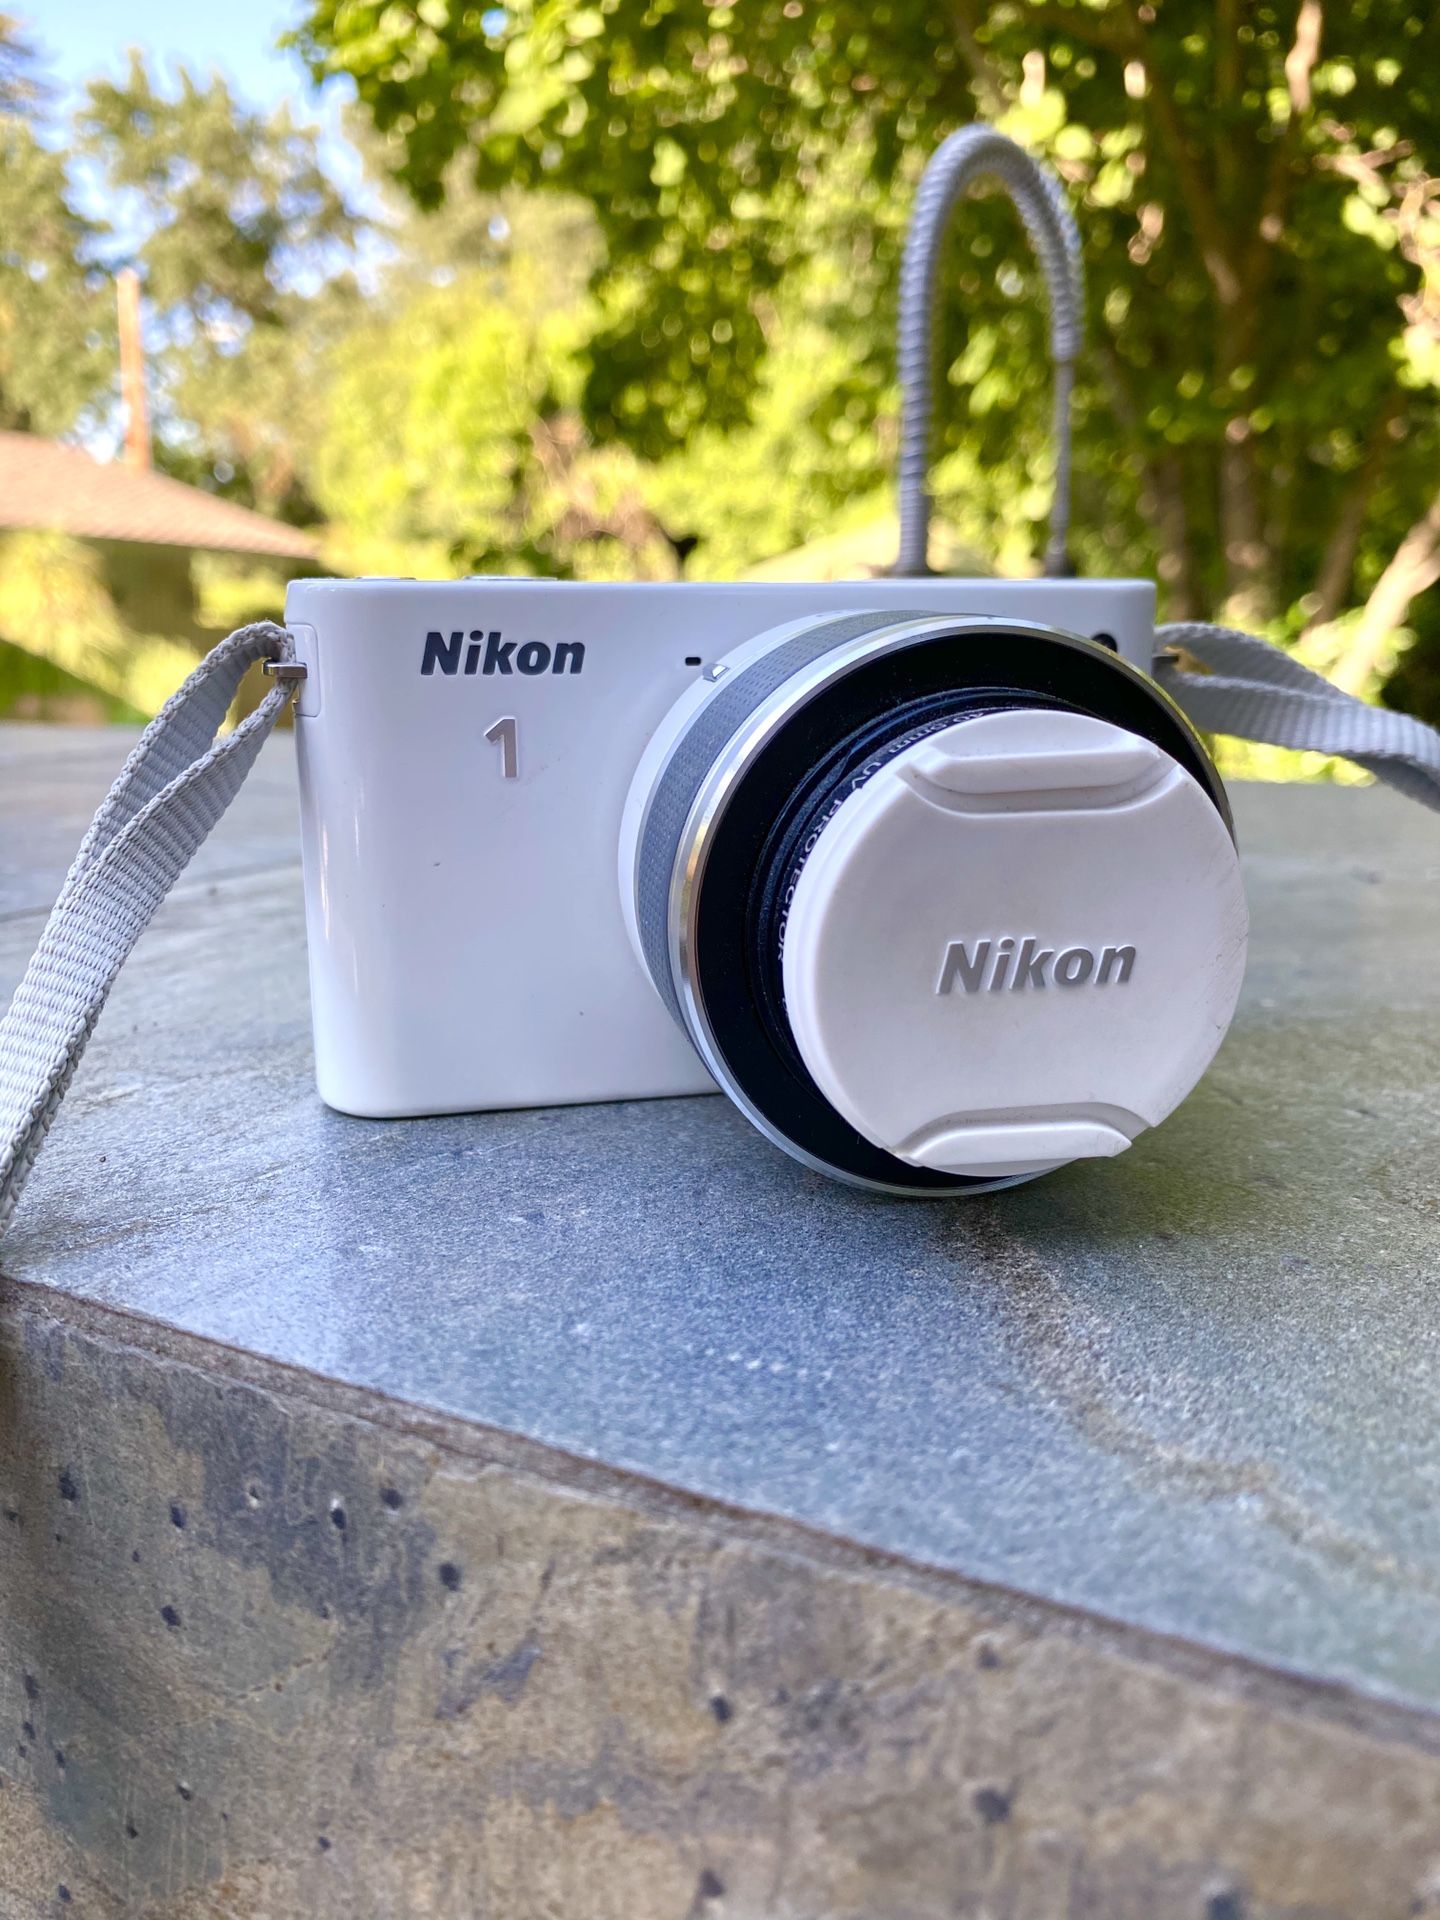 Nikon 1 Digital Camera